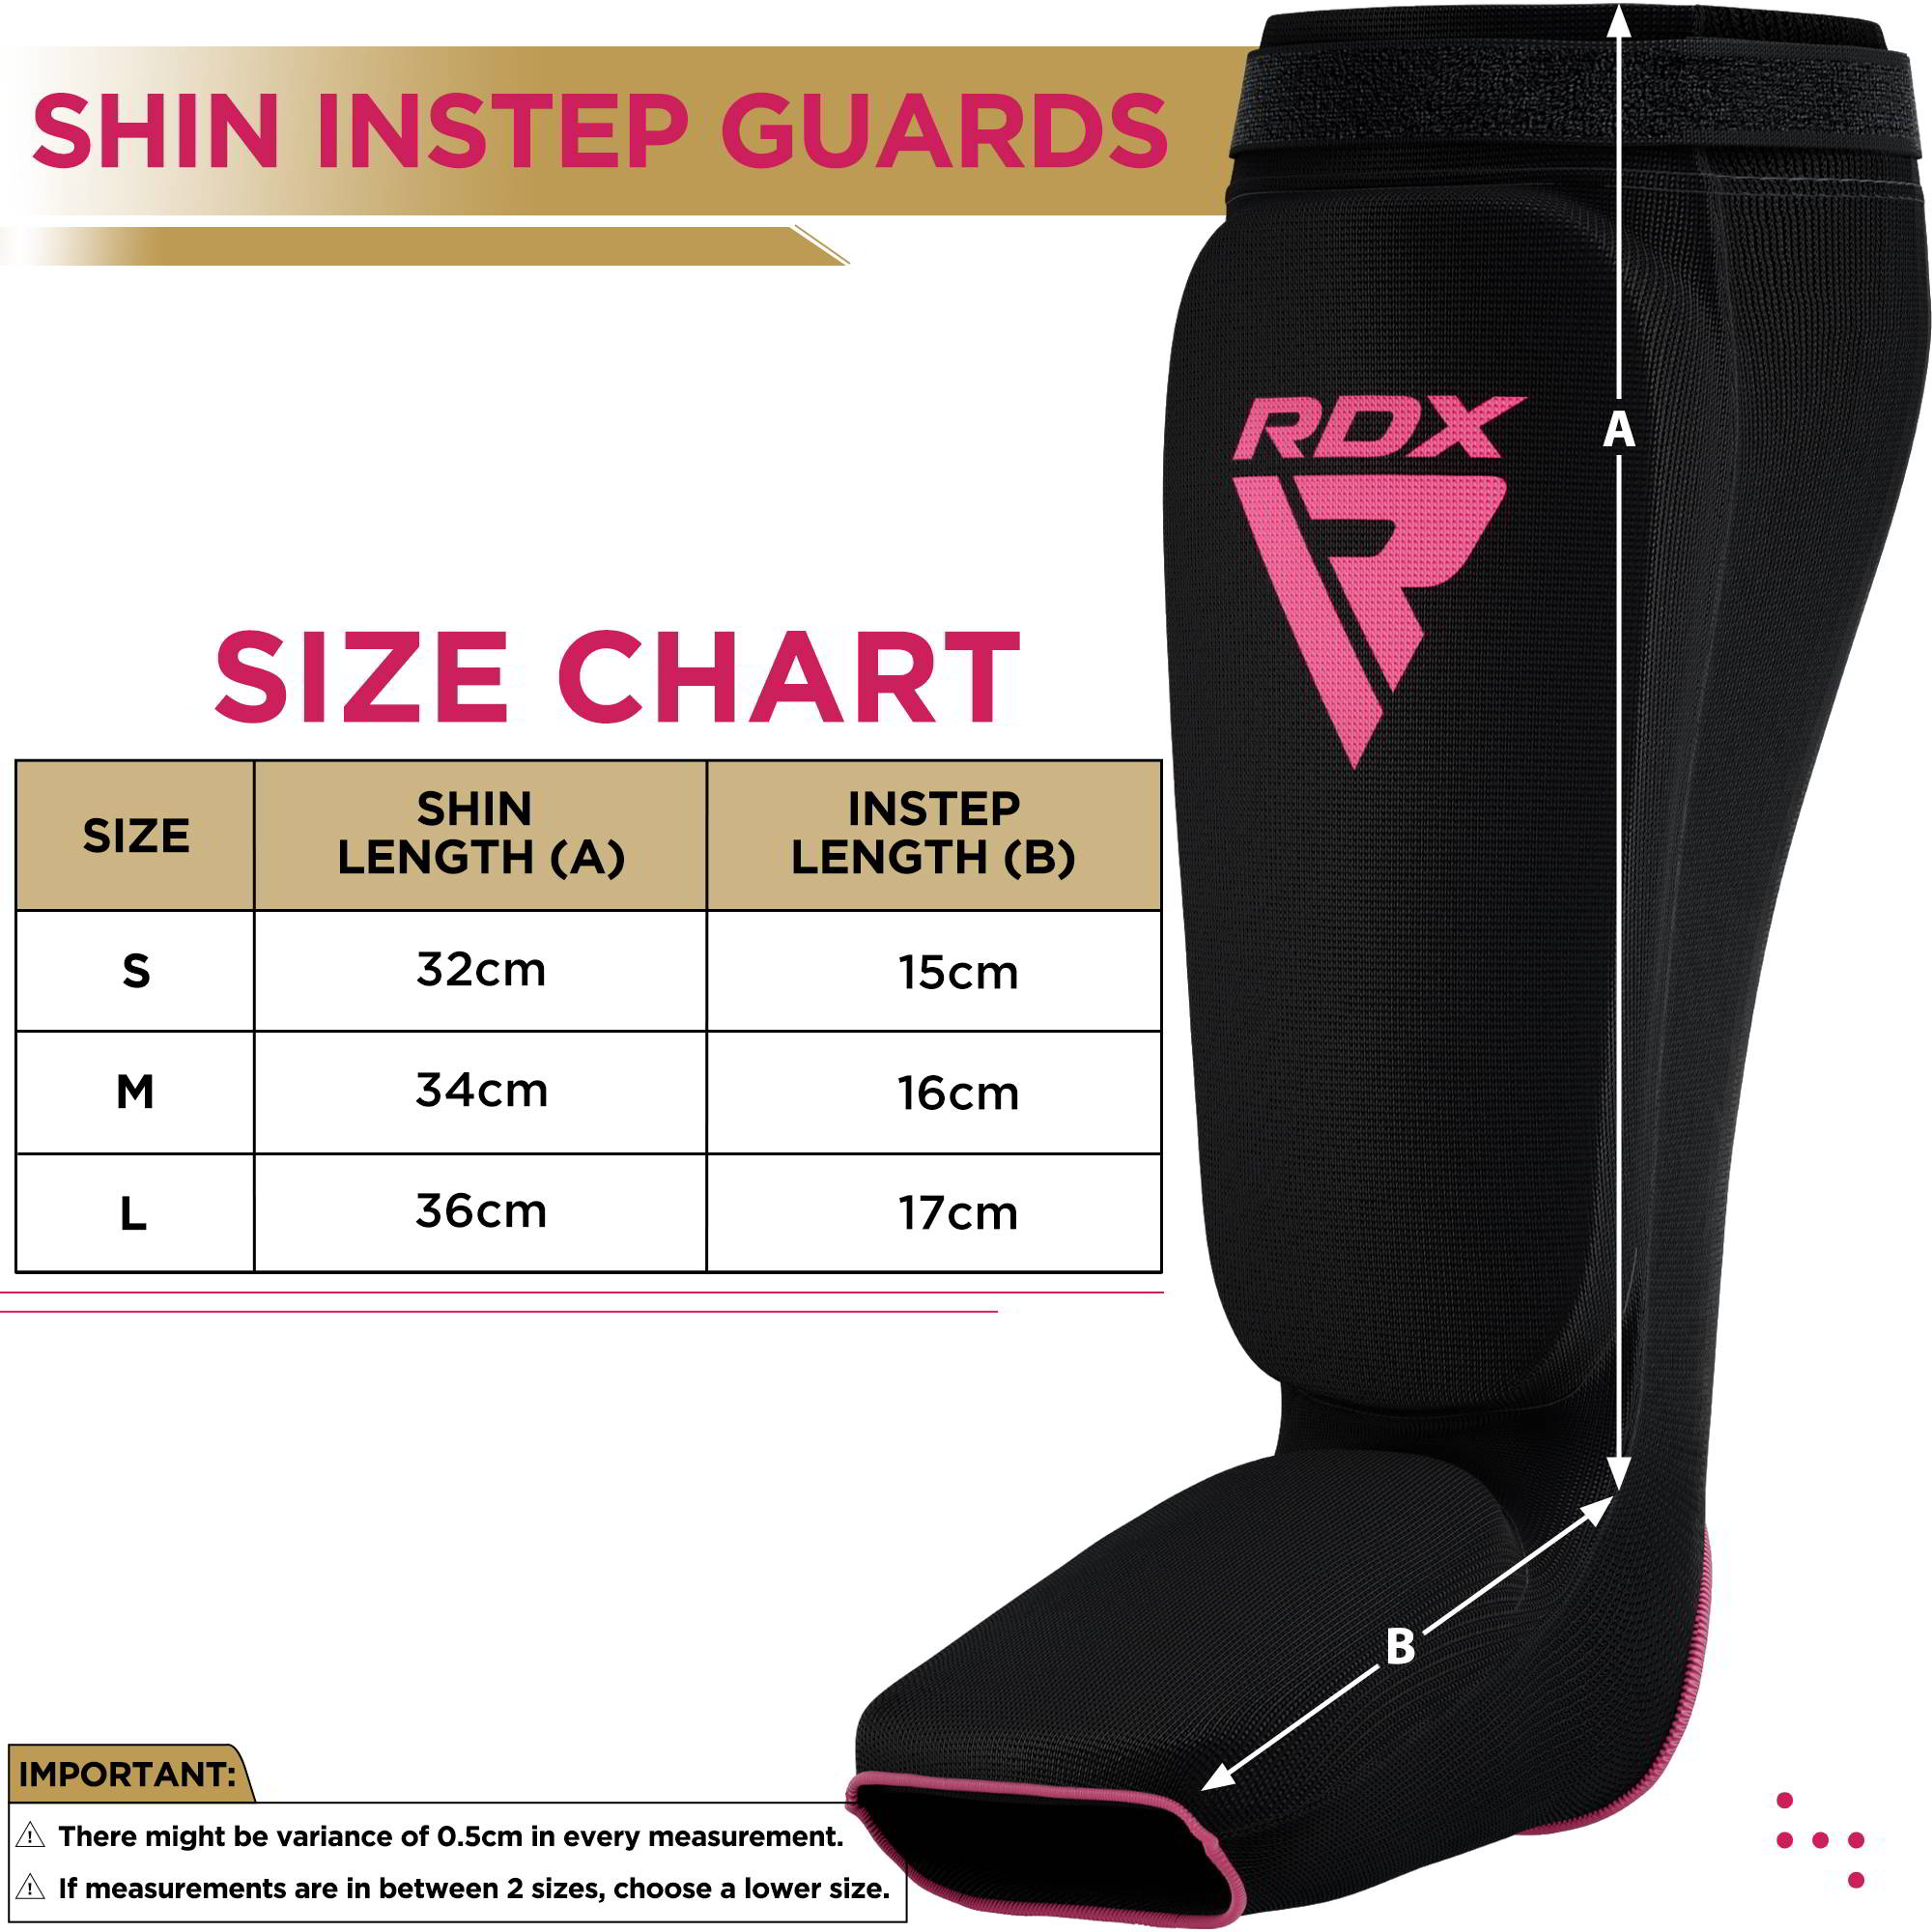 RDX SIB Shin Instep Guard OEKO-TEX® Standard 100 certified#color_pink